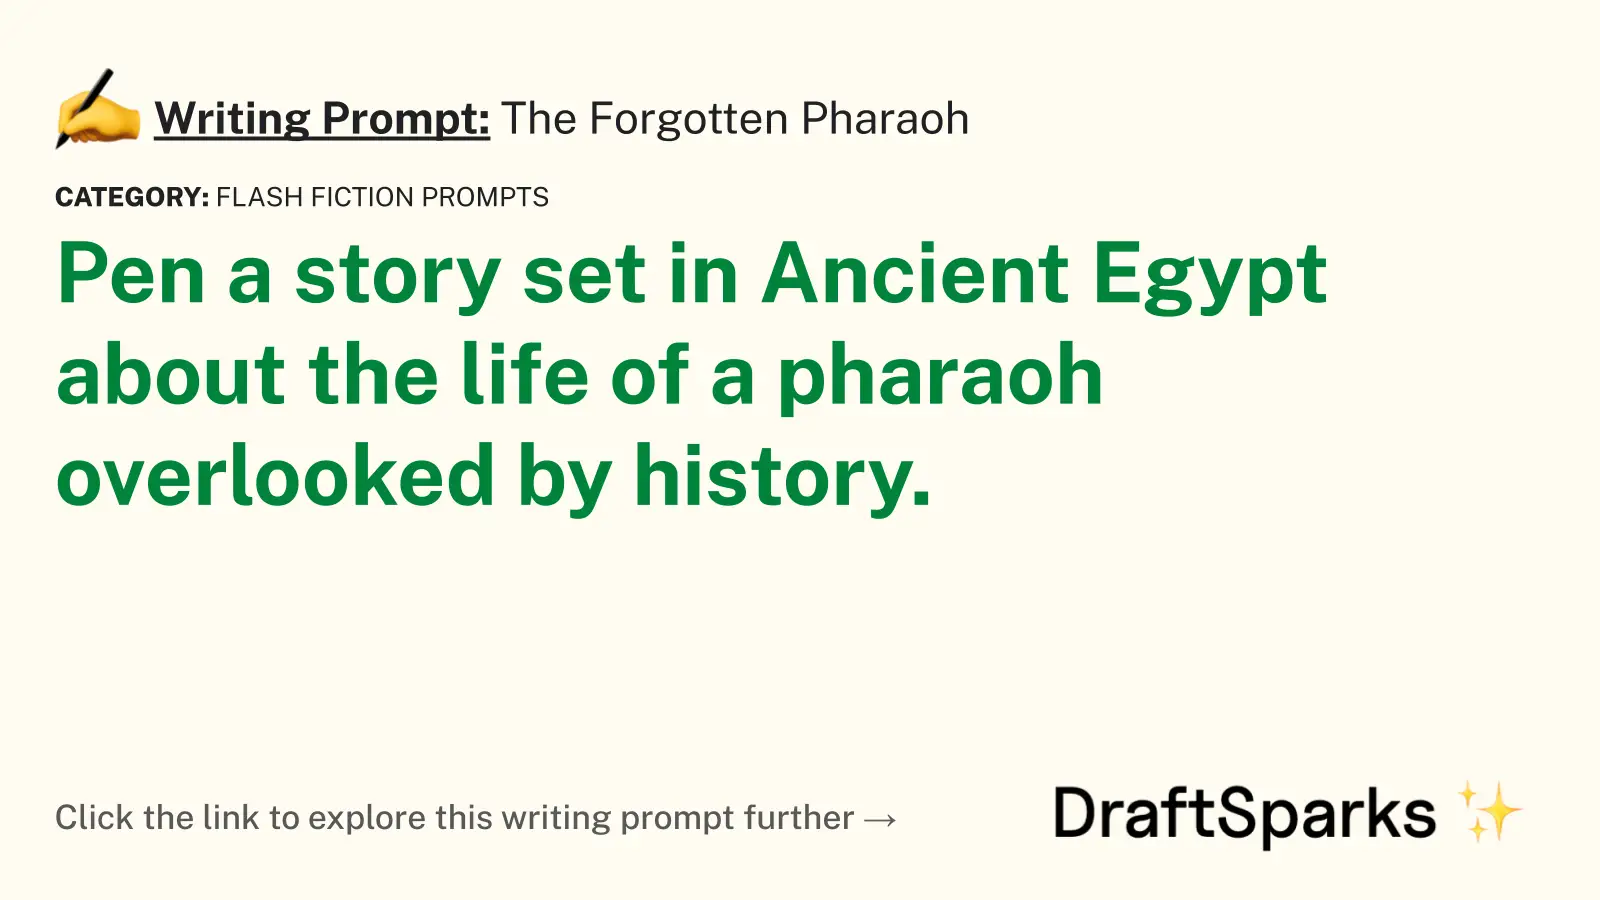 The Forgotten Pharaoh